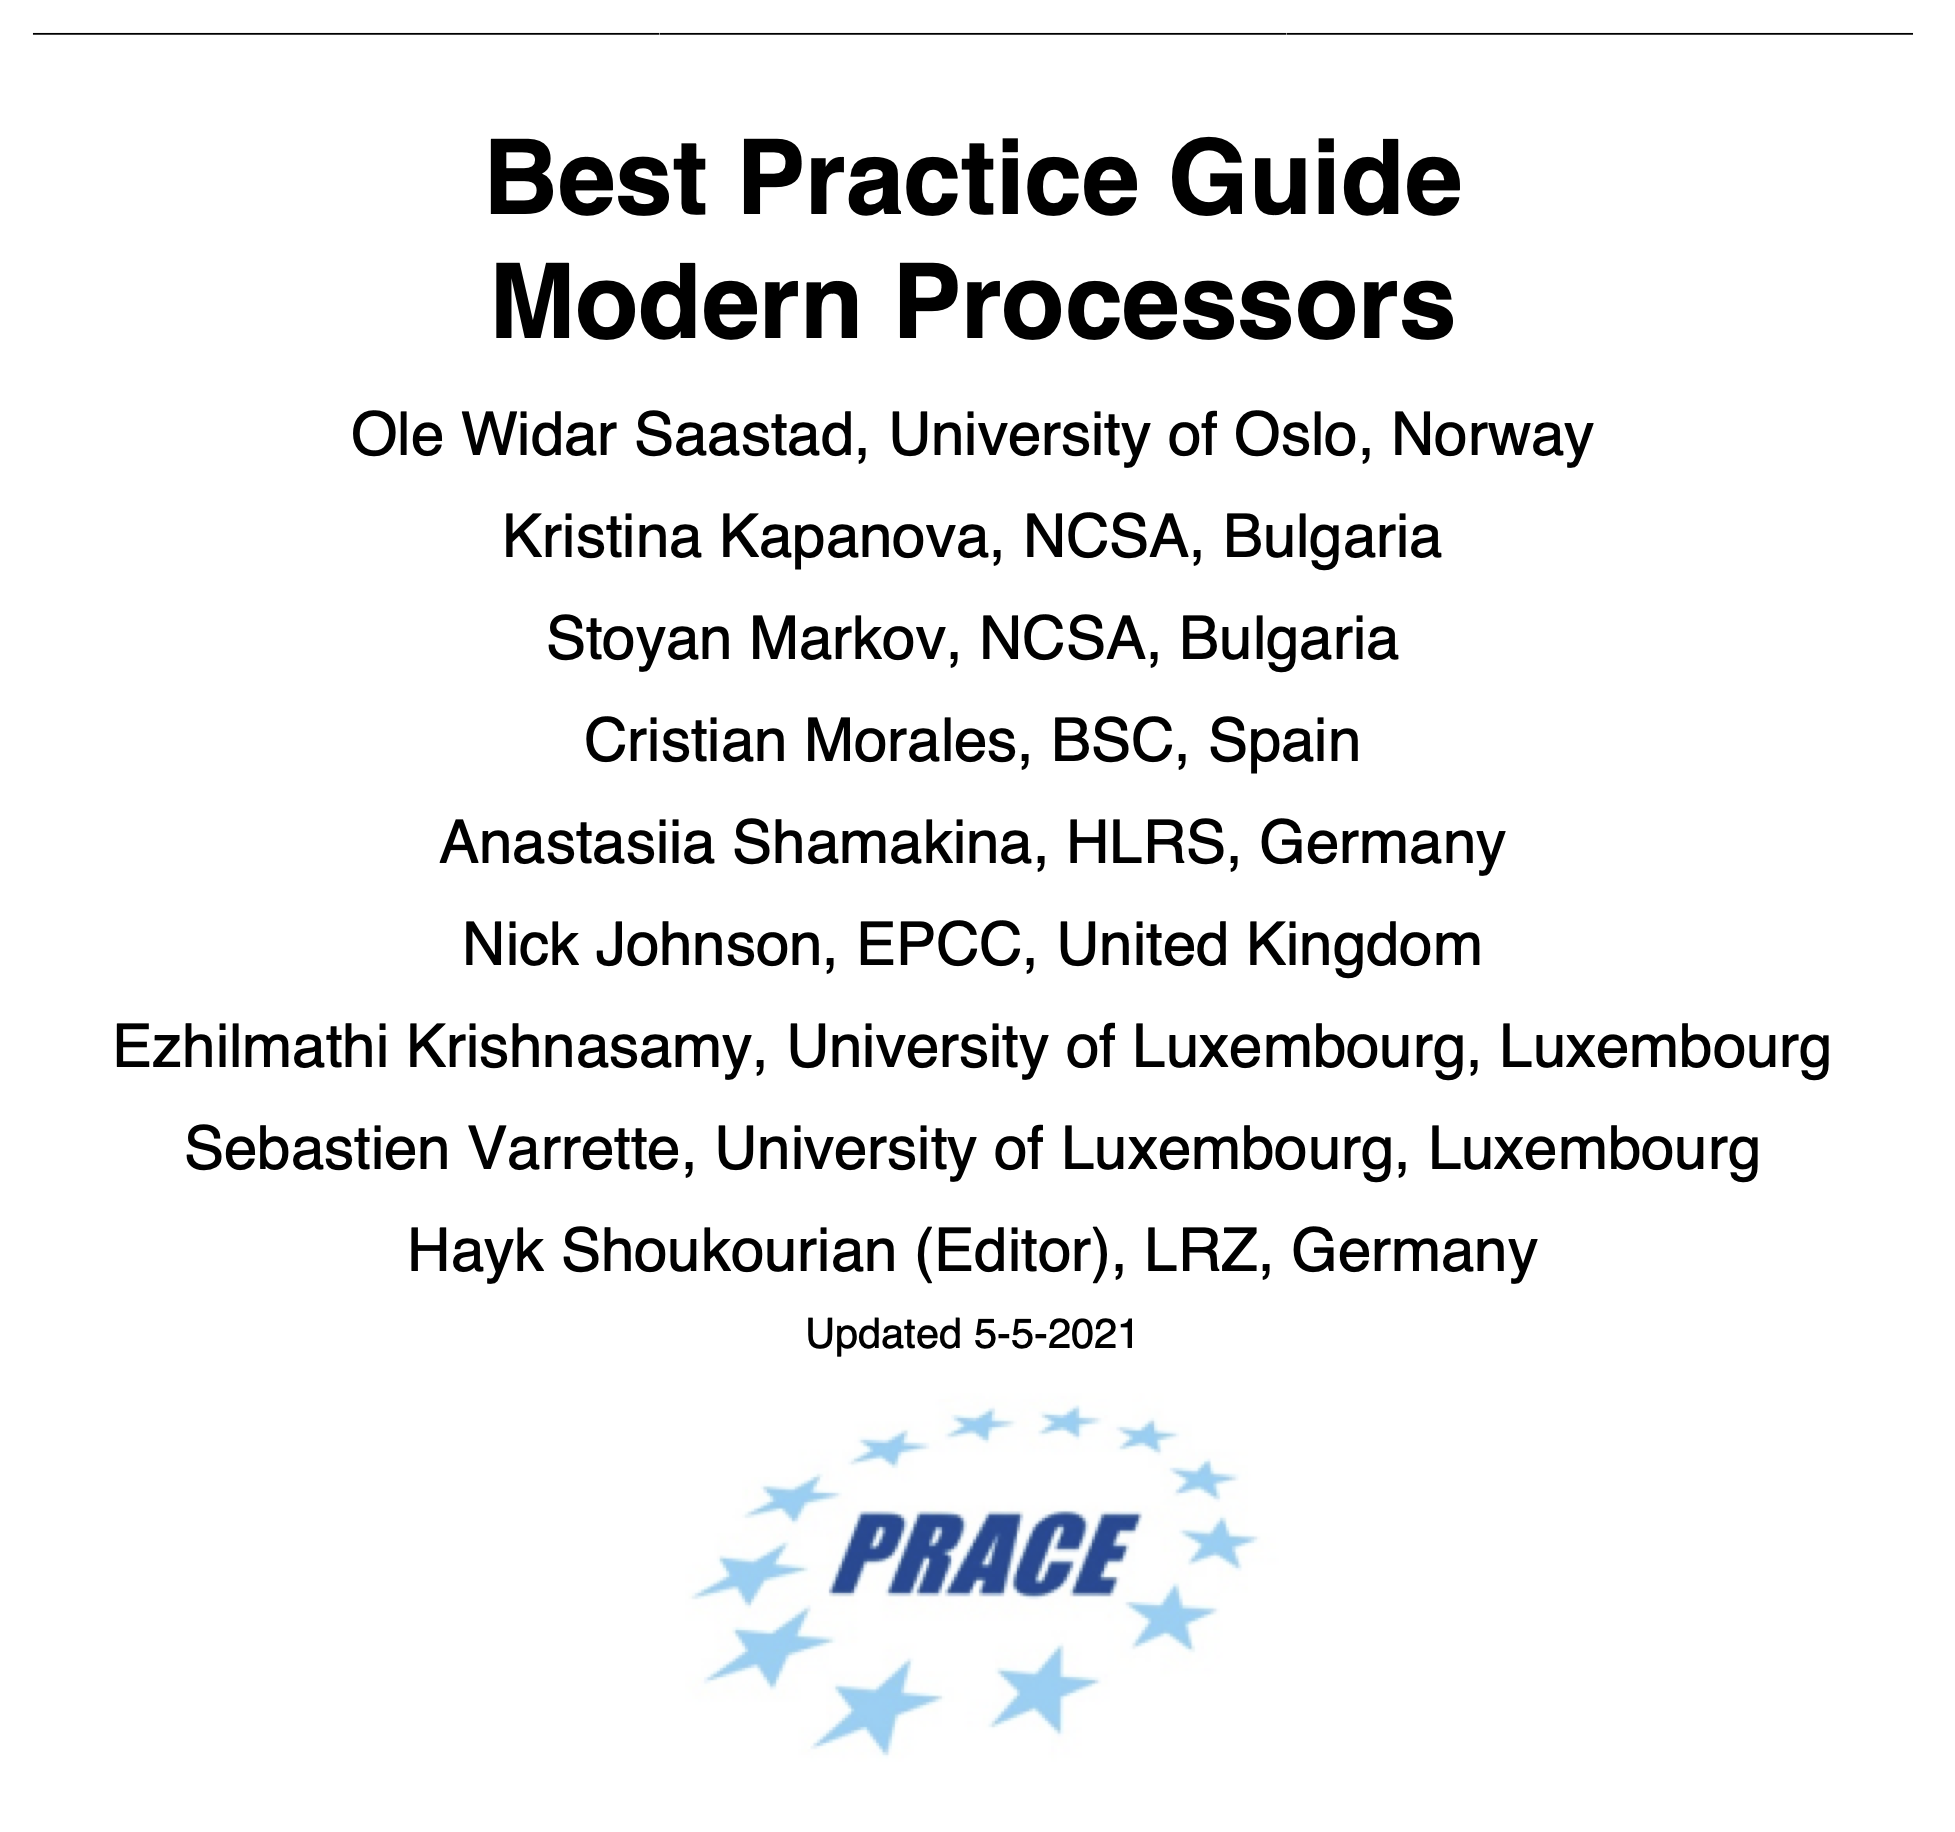 PRACE Best Practice Guide on Modern Processors